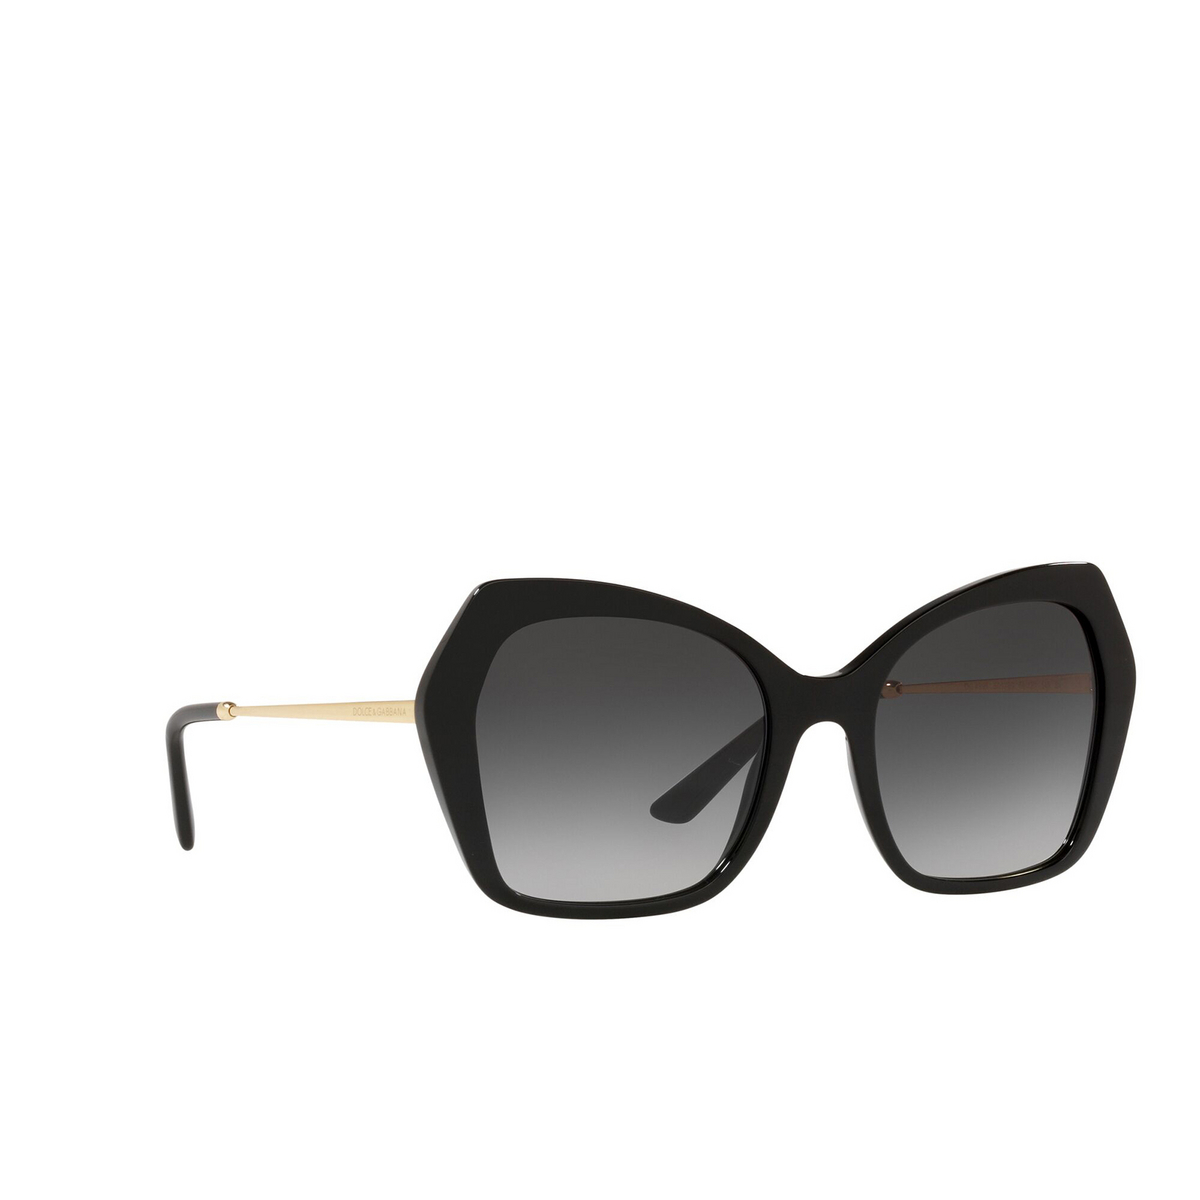 Dolce & Gabbana® Butterfly Sunglasses: DG4399 color Black 501/8G - three-quarters view.